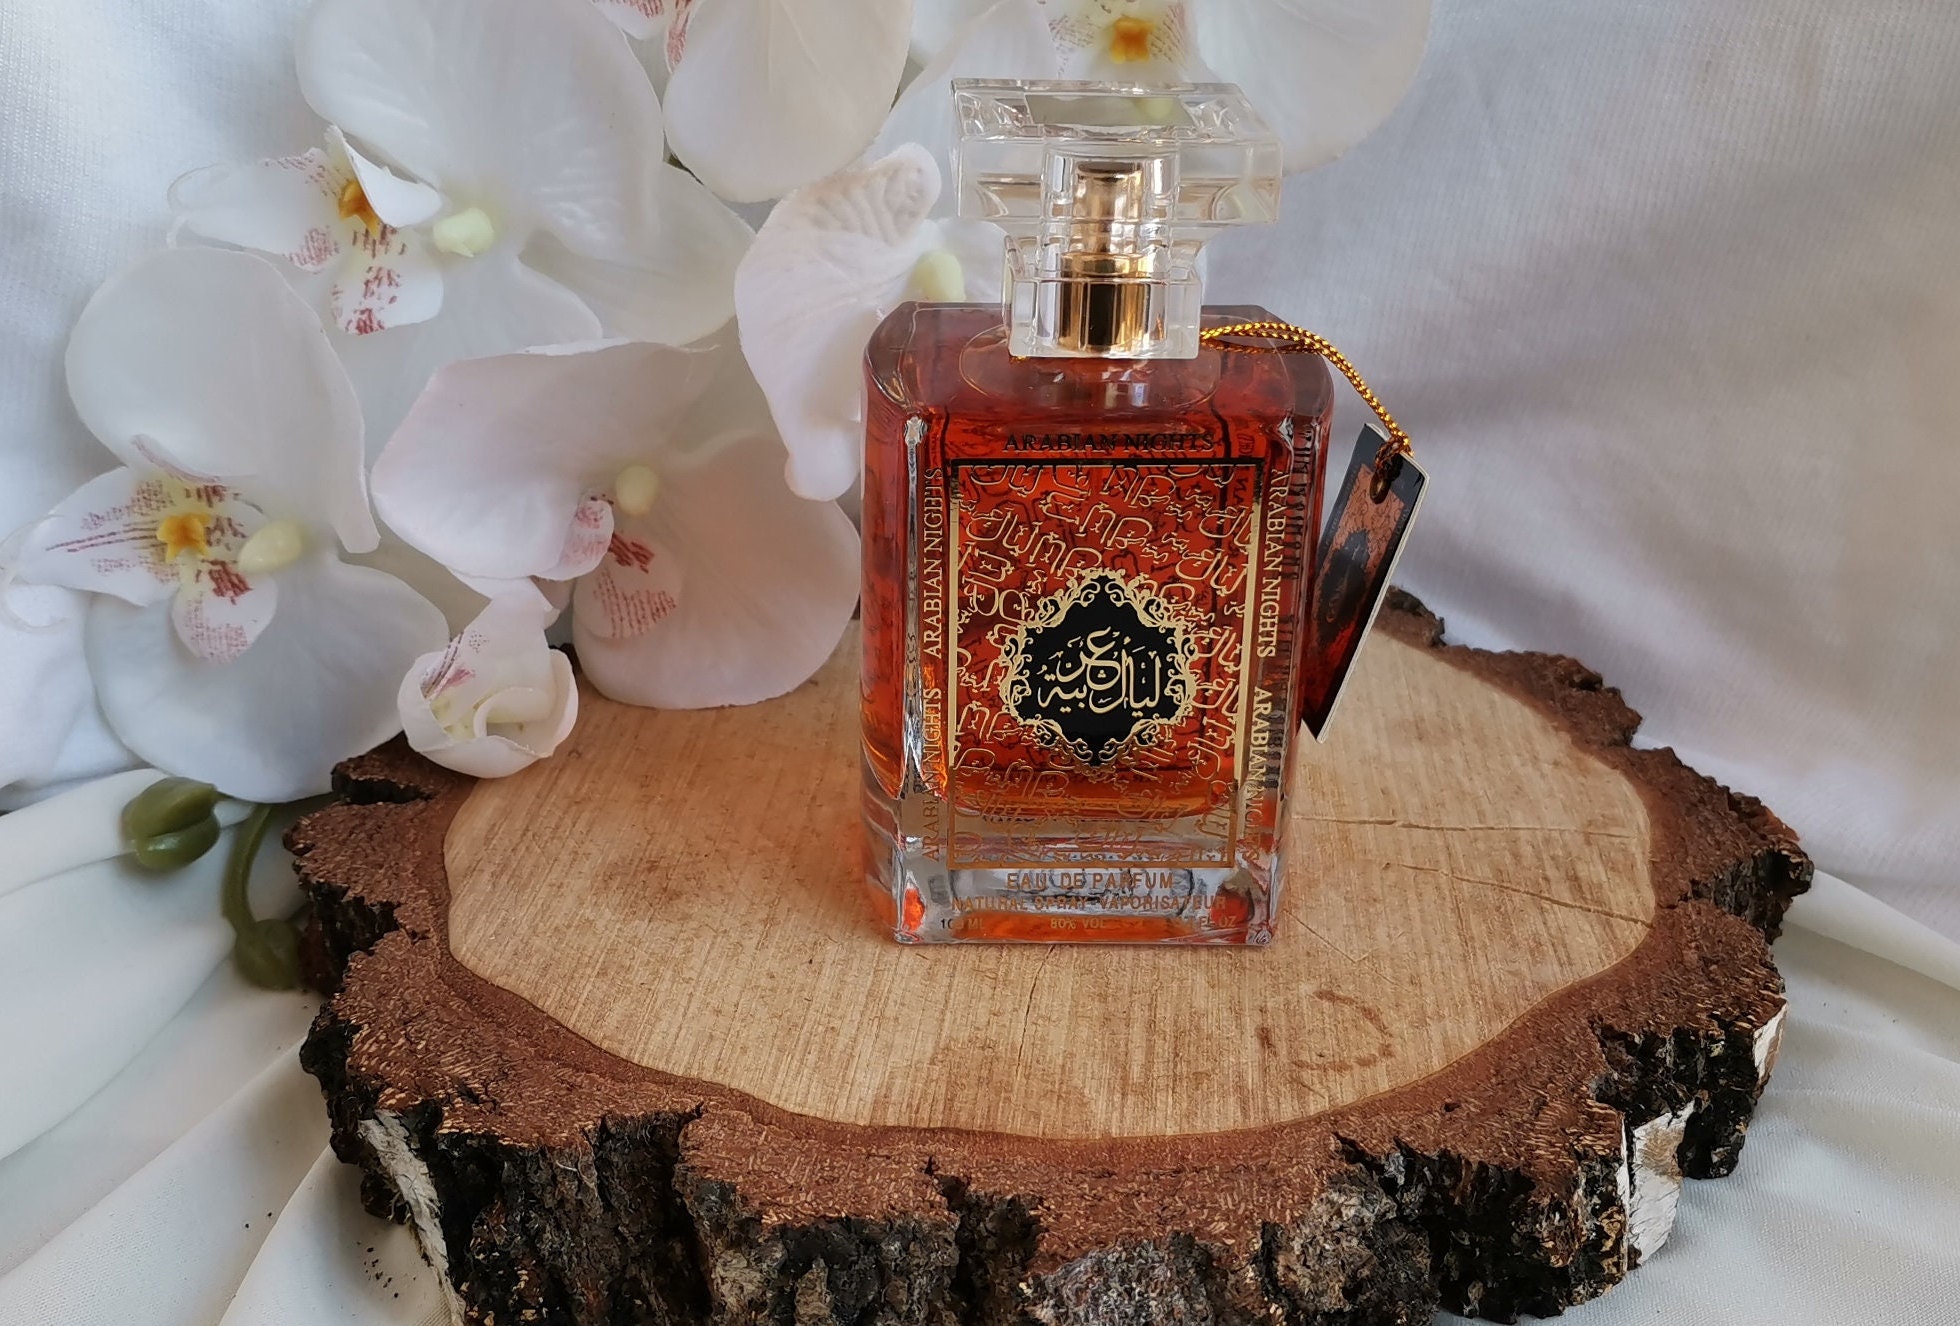 Victoria Secret Amber Romance Mist Perfume Original Fragrance Mother Sister  Gift Idea for Women 